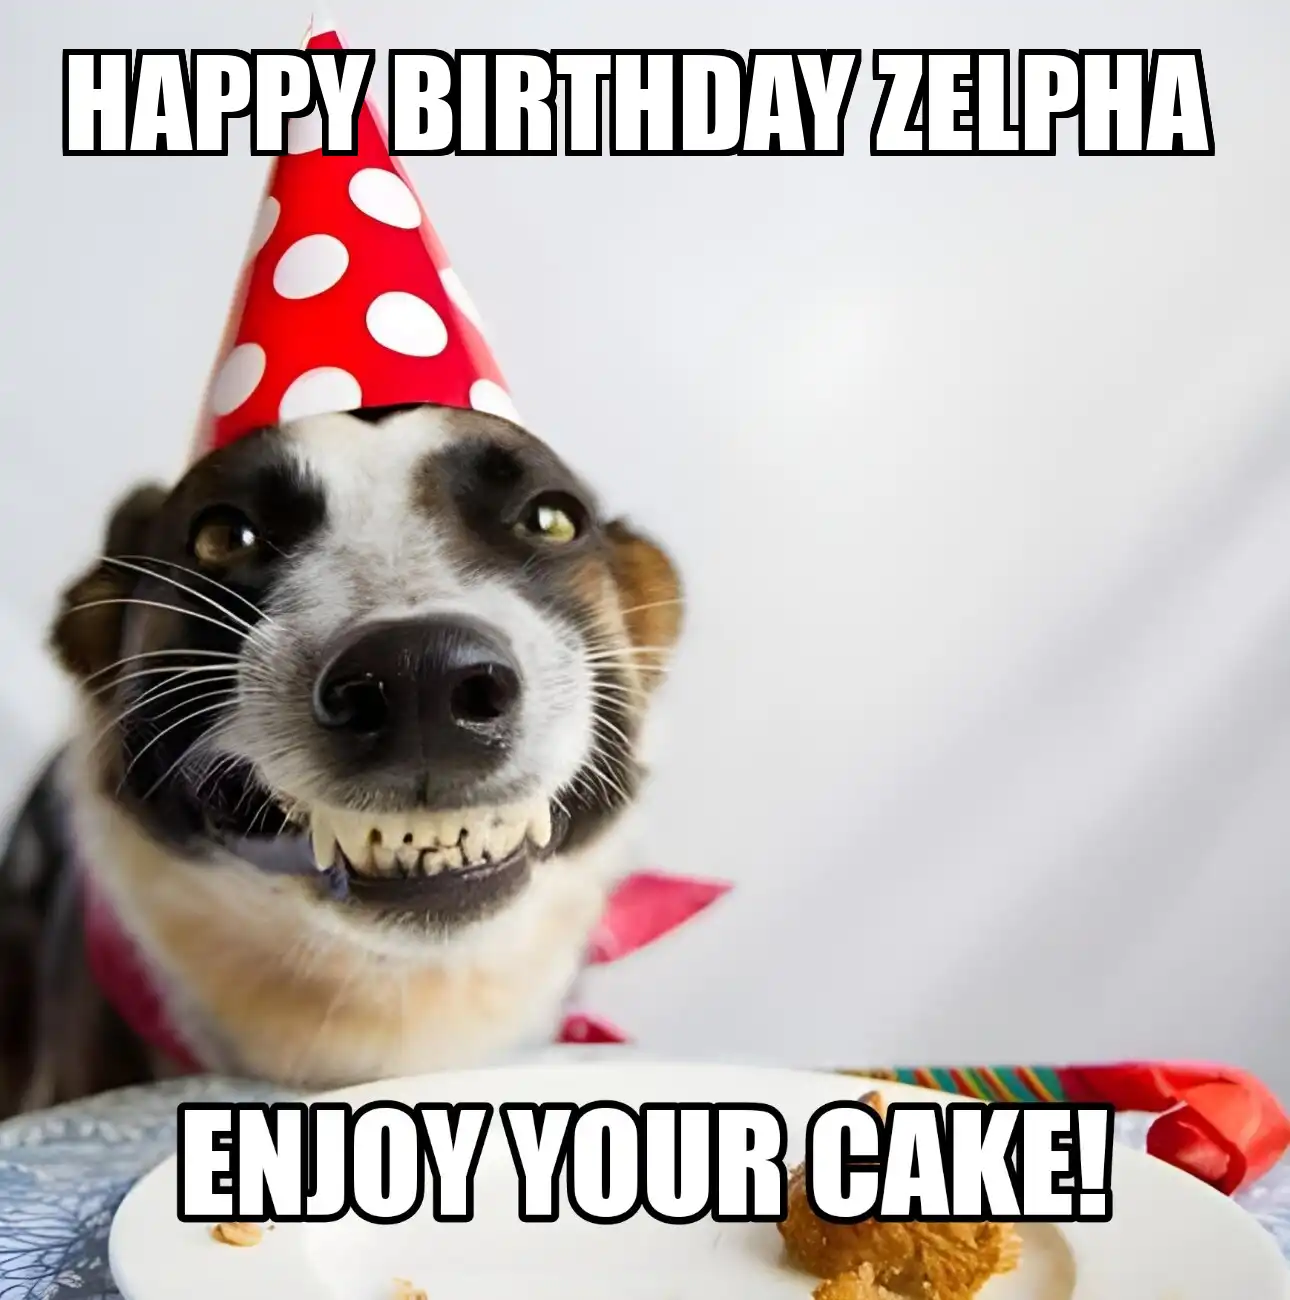 Happy Birthday Zelpha Enjoy Your Cake Dog Meme